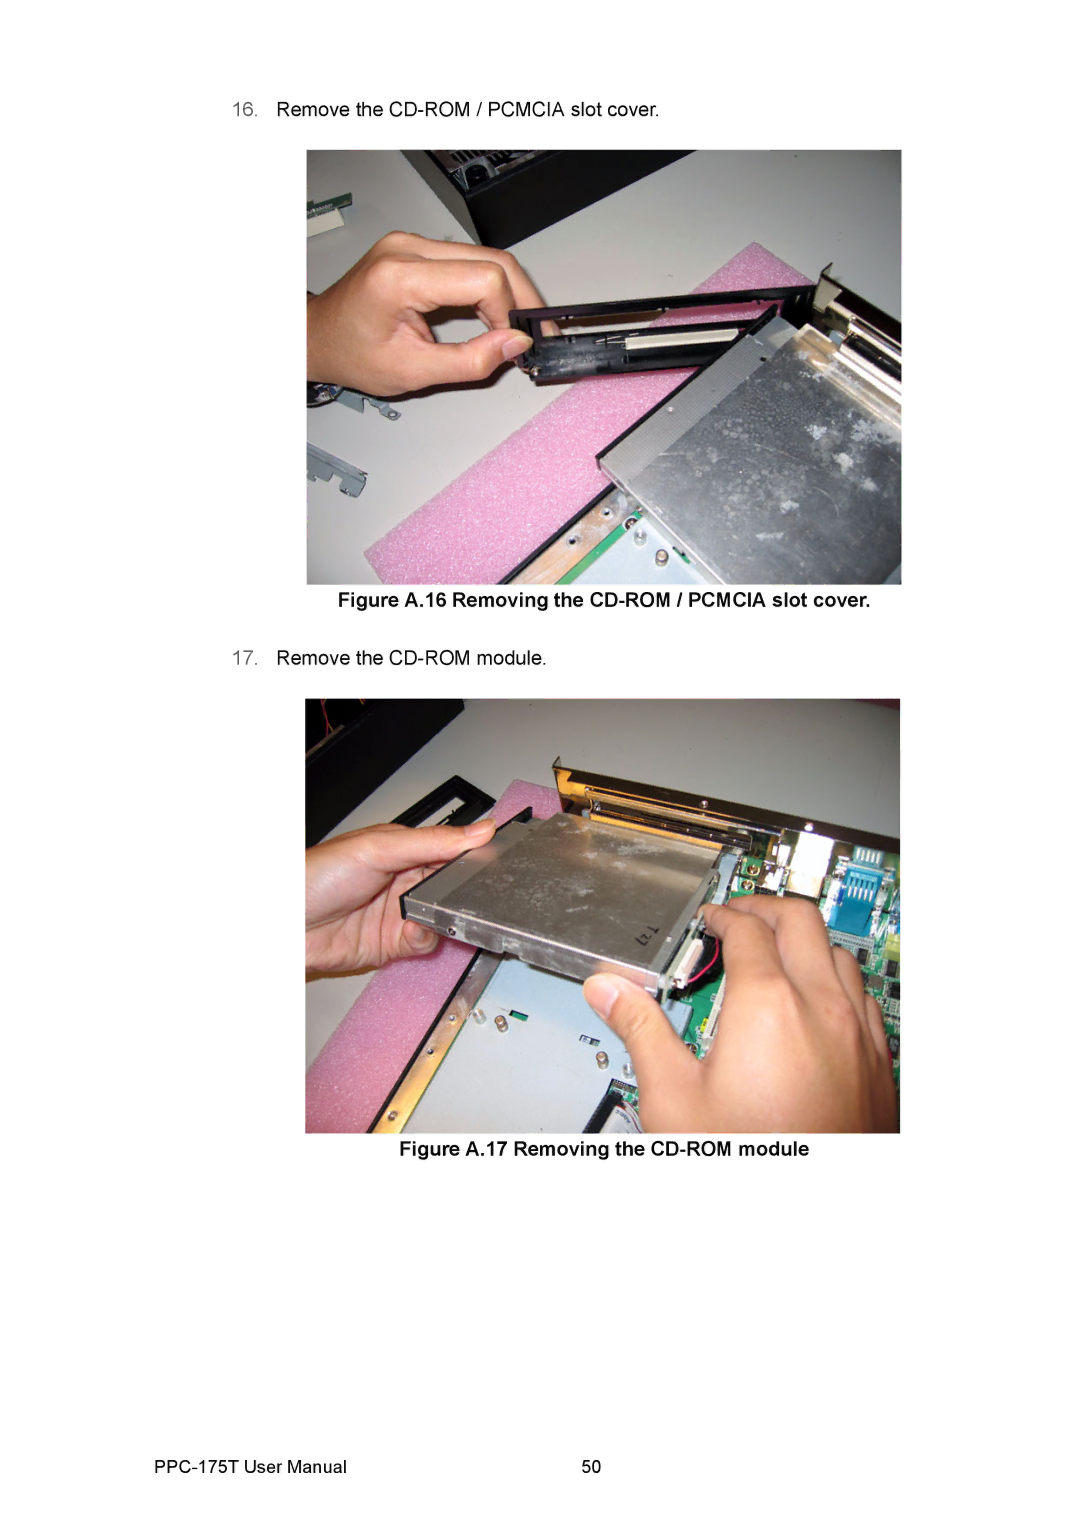 Advantech PPC-175T user manual Figure A.16 Removing the CD-ROM / Pcmcia slot cover 